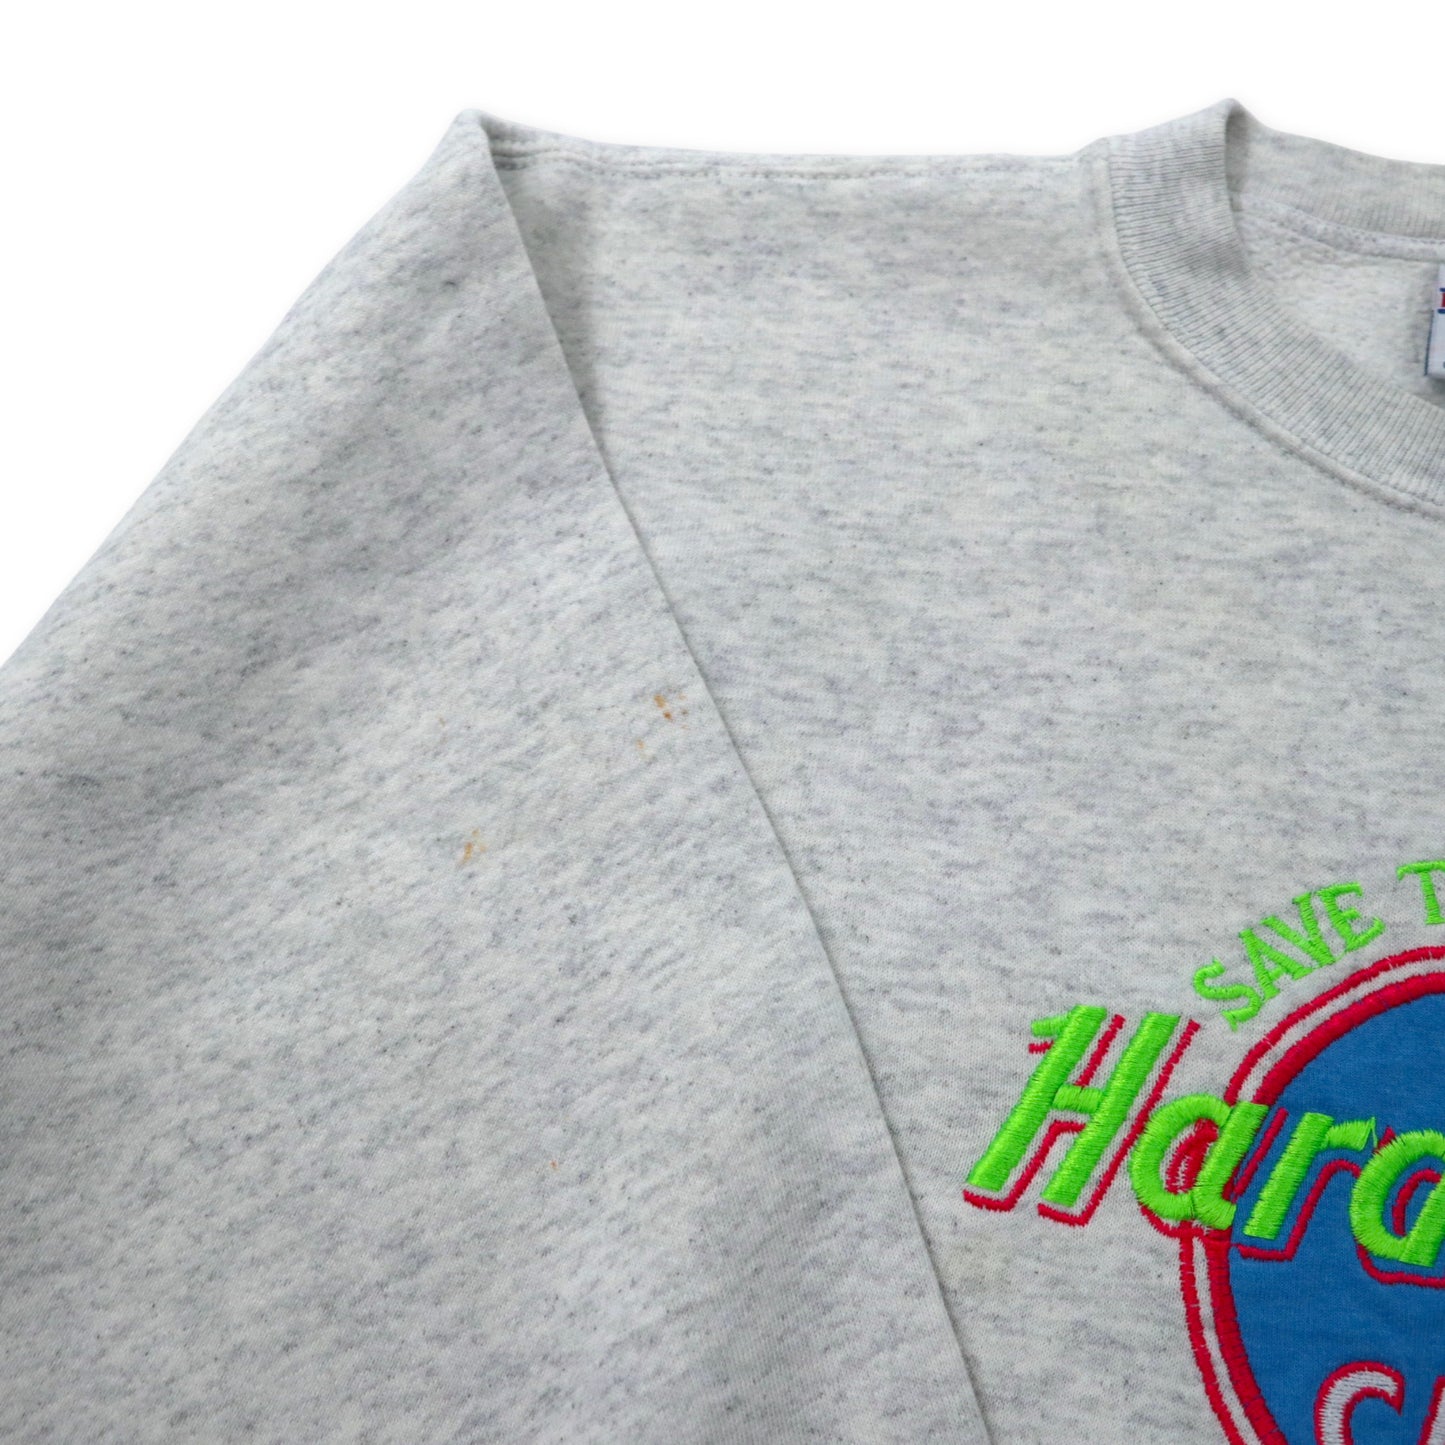 HARD ROCK CAFE USA MADE 90s logo embroidery Sweatshirt XL gray cotton  cotton brushed ling santee Sweats big size